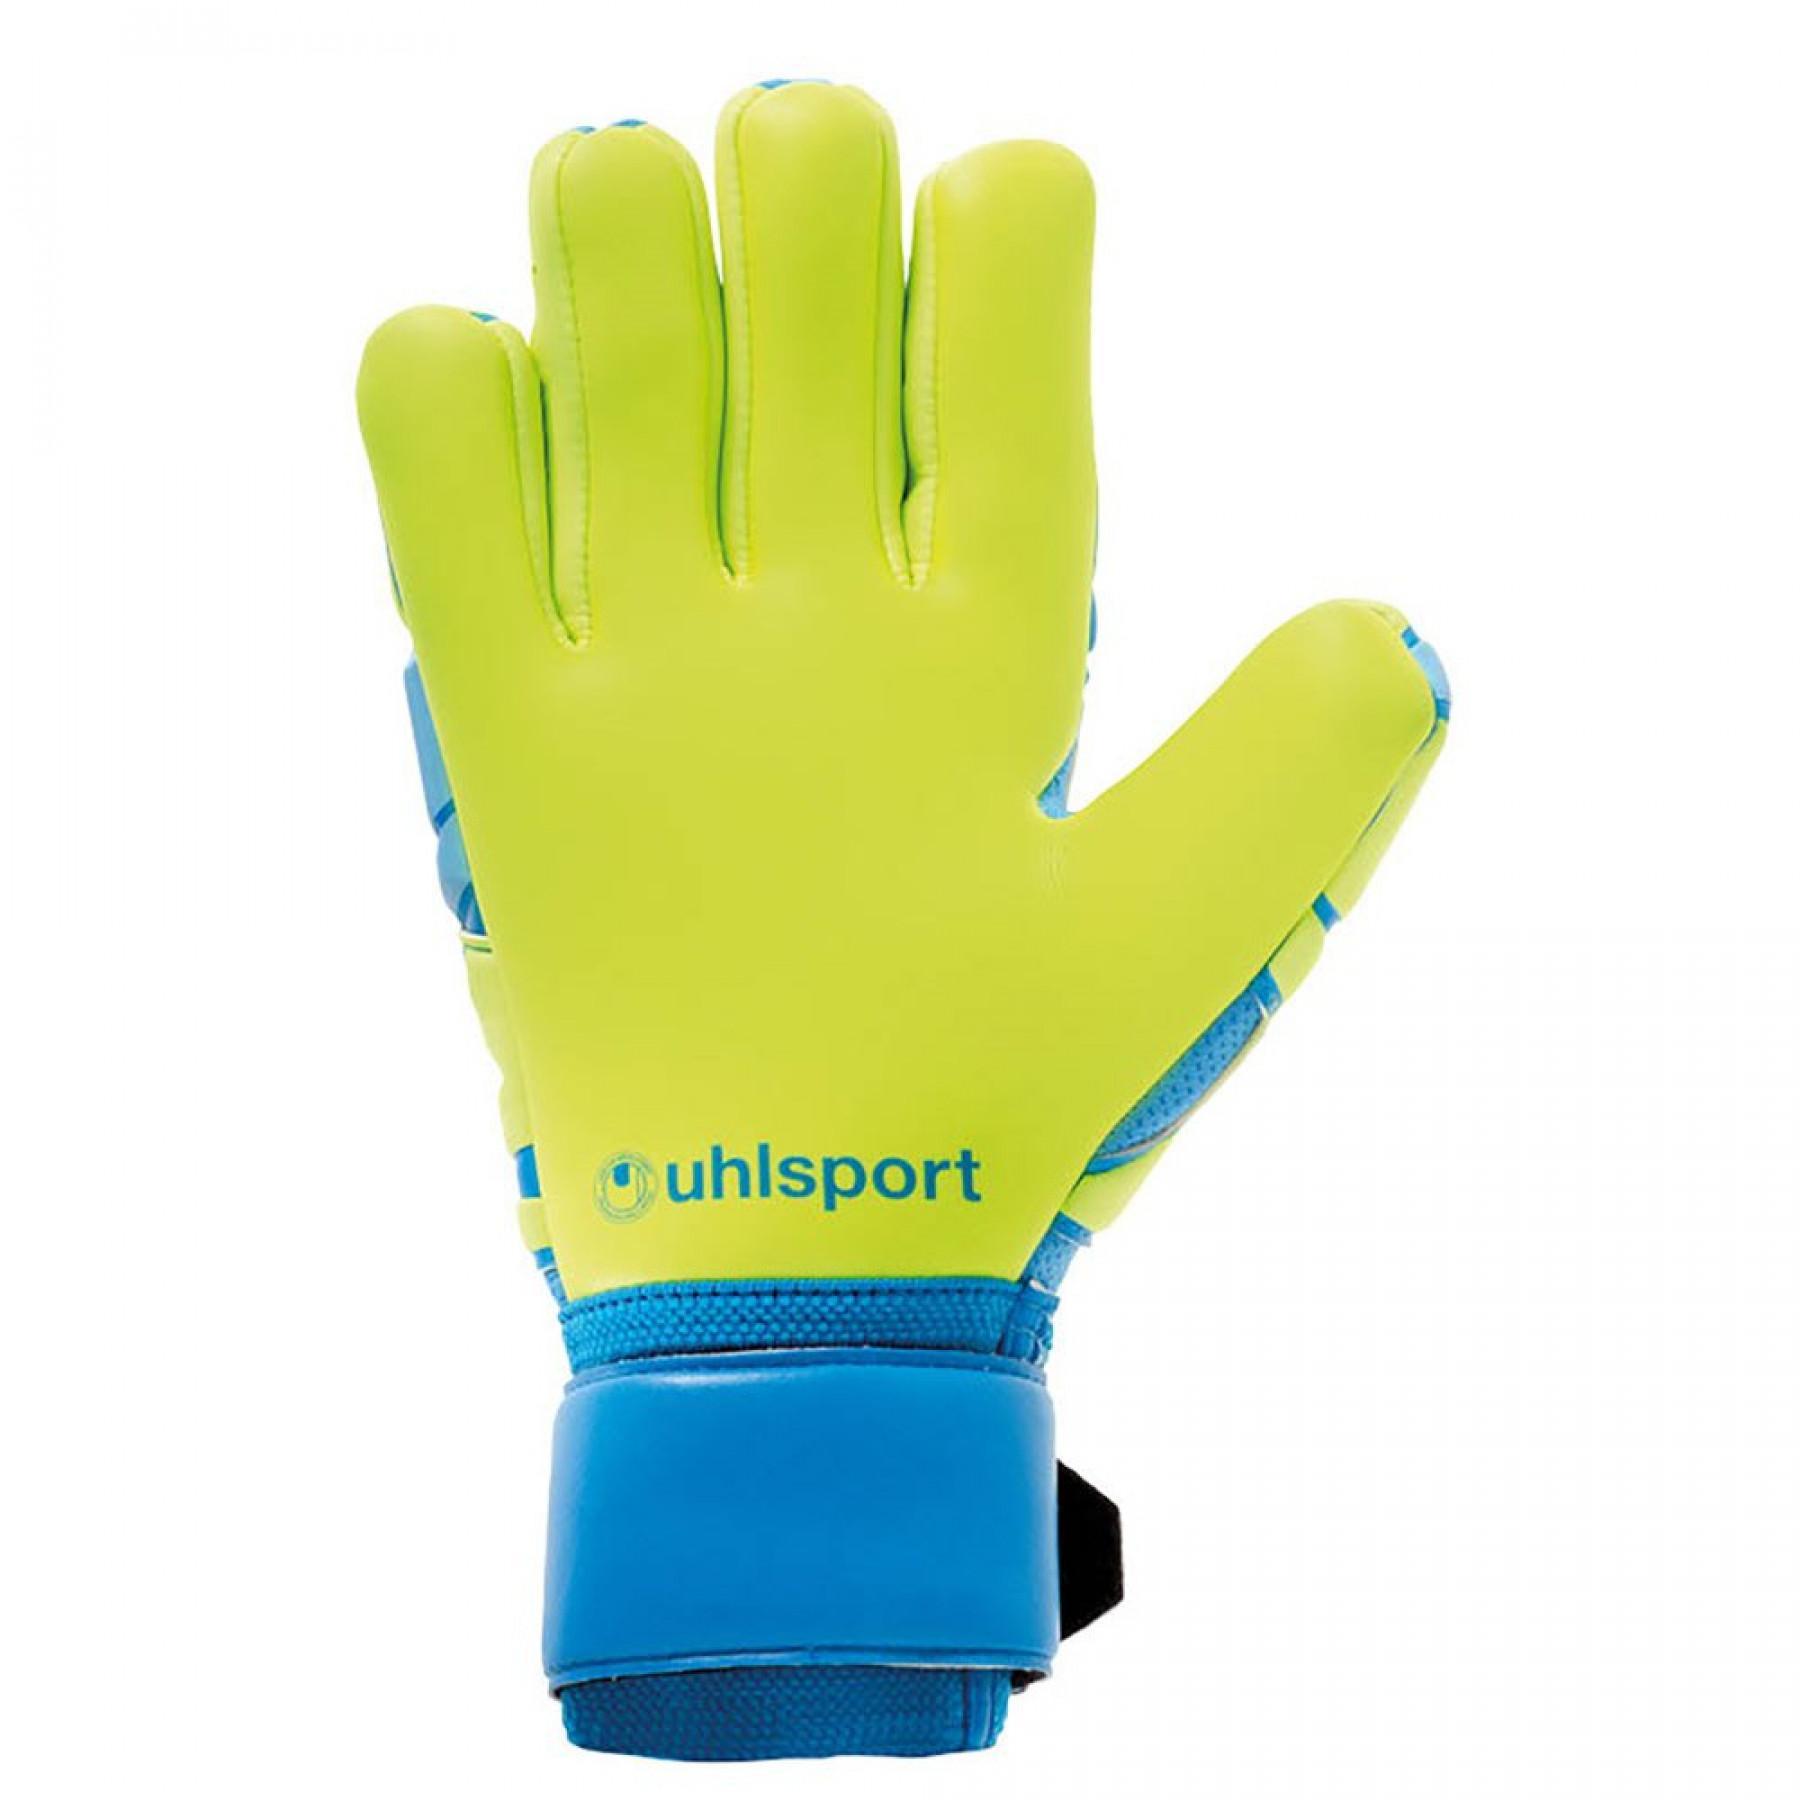 Goalkeeper gloves Uhlsport Radar control Absolutgrip hn